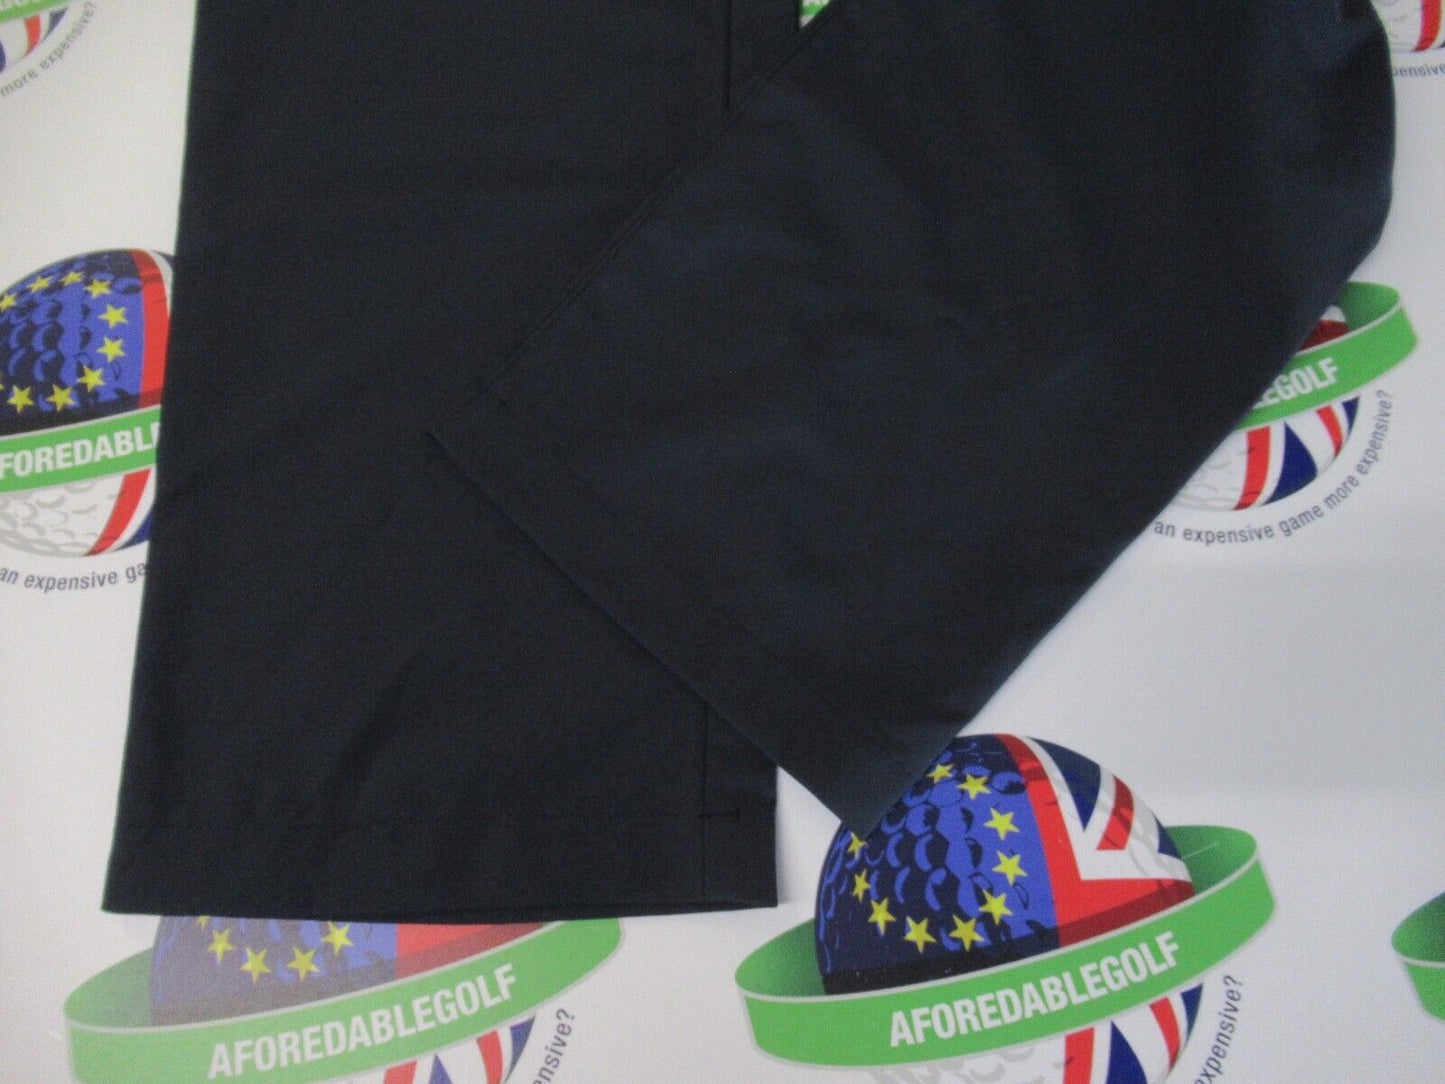 ping bradley navy golf trousers waist 36" x leg 31"